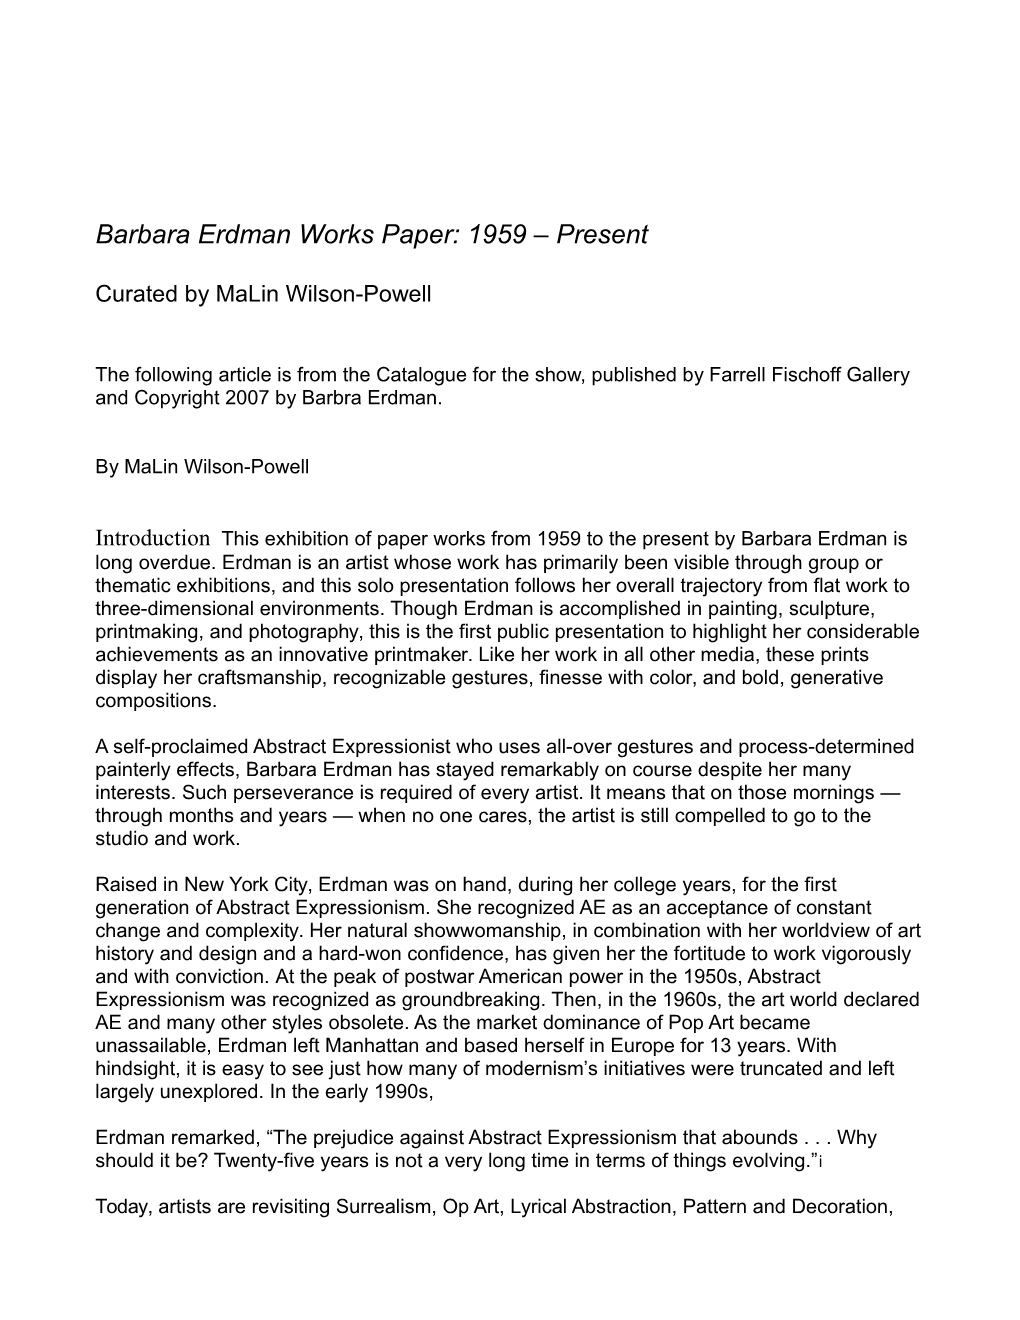 Barbara Erdman Works Paper: 1959 Present